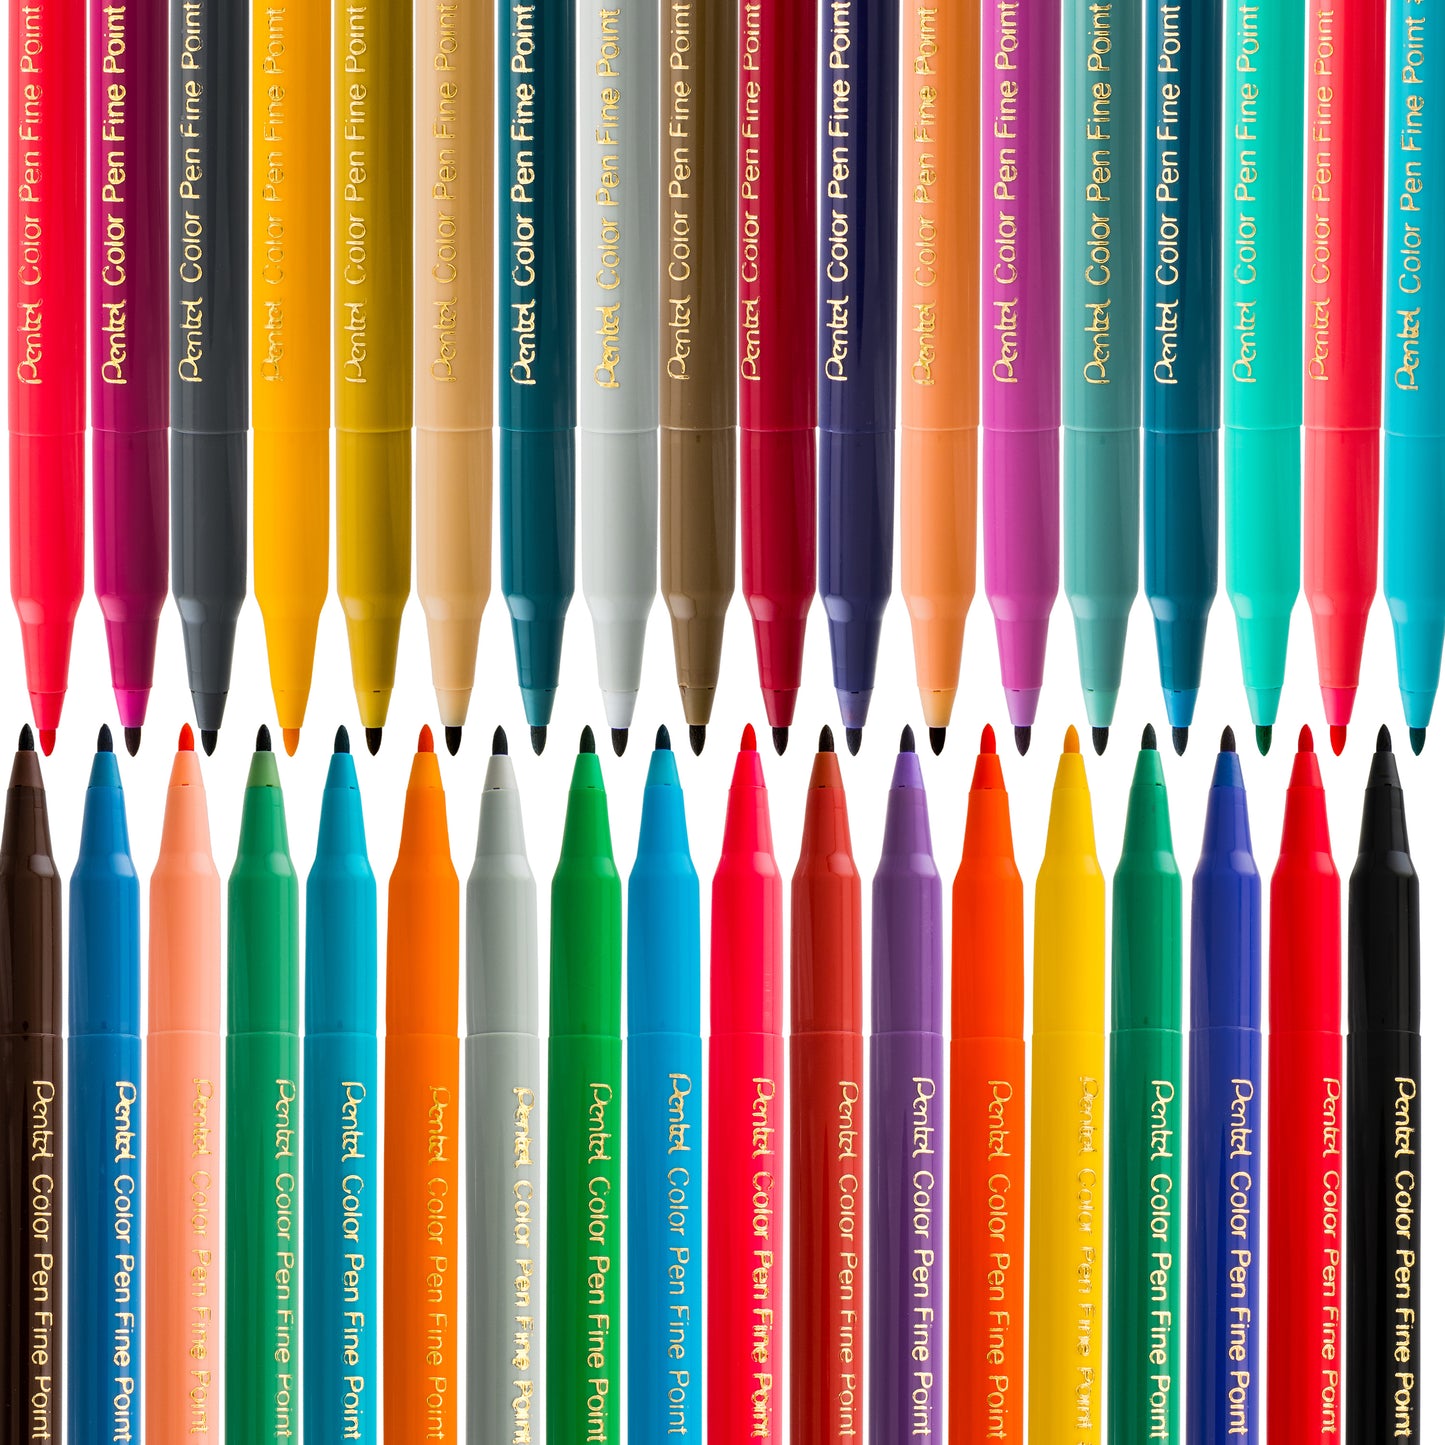 Color Pen®, 36 Pack – Pentel of America, Ltd.